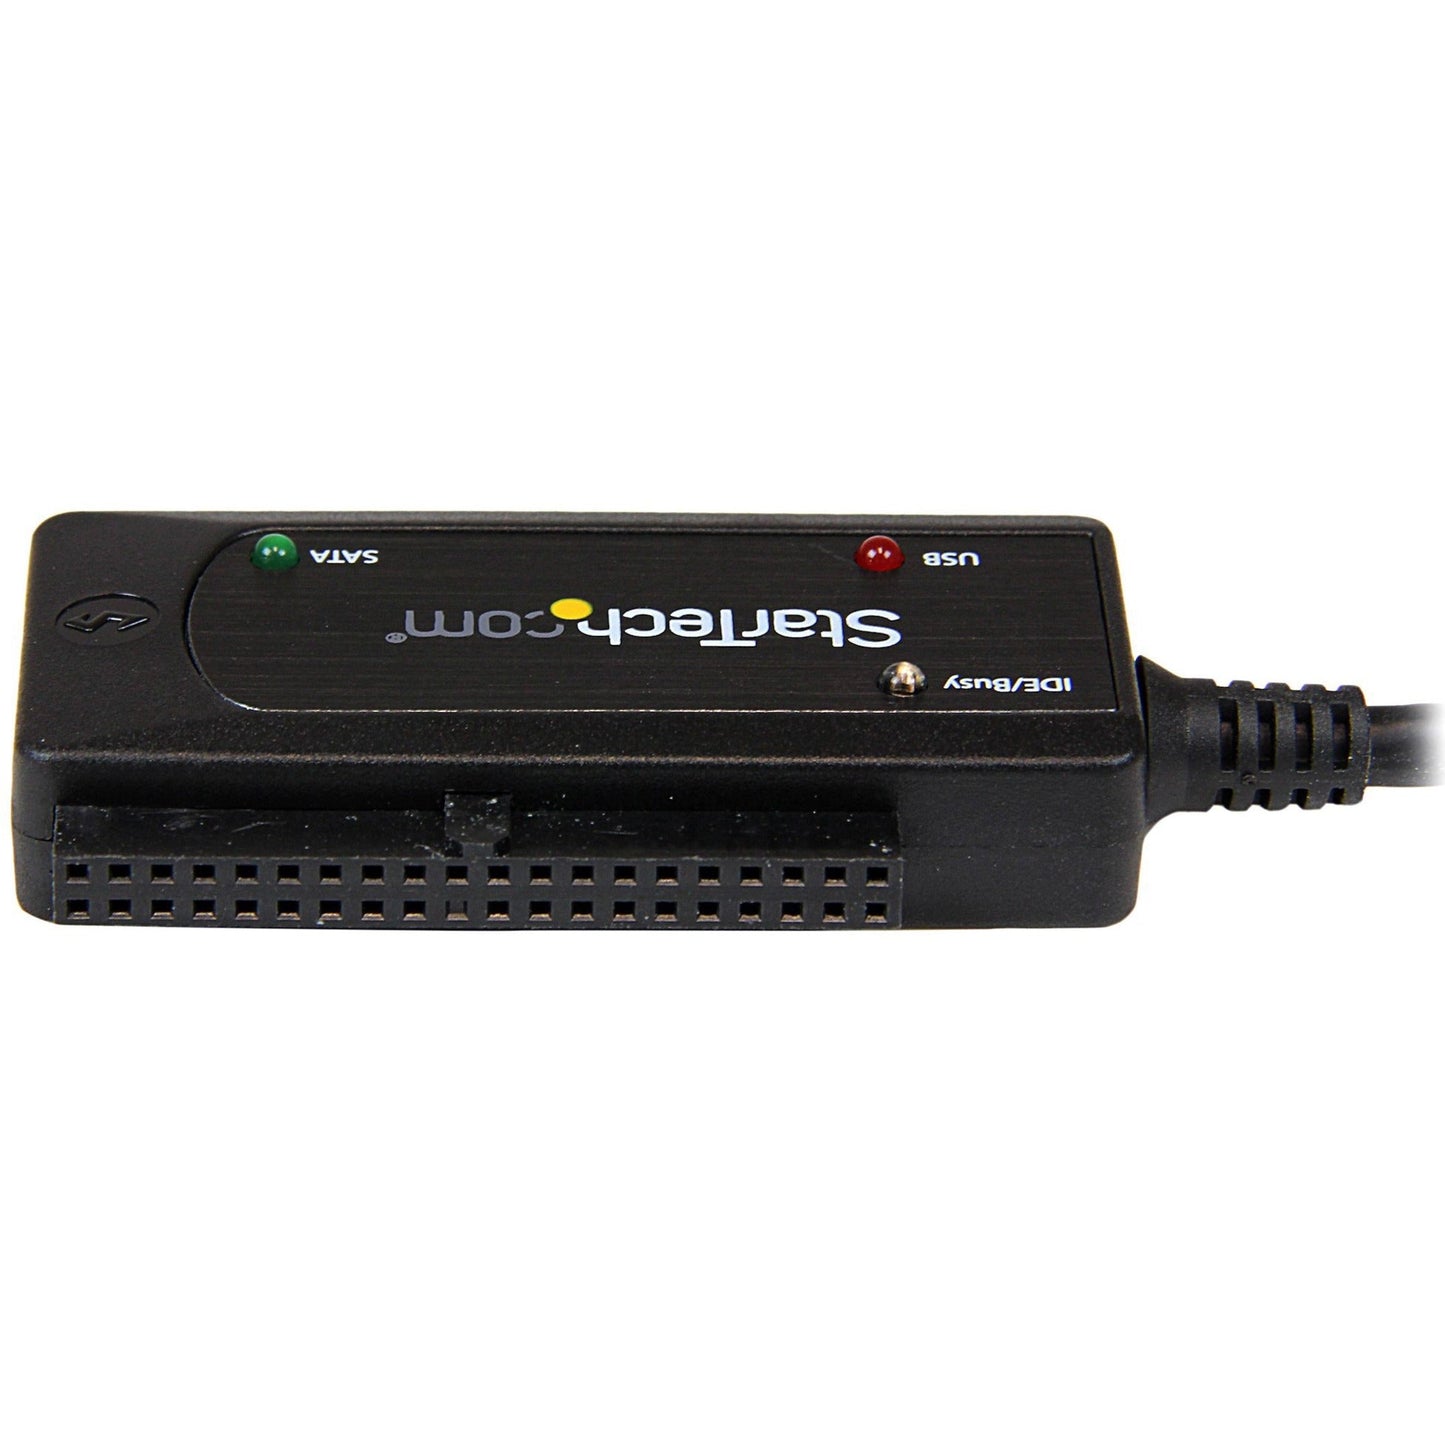 StarTech.com USB 3.0 to SATA or IDE Hard Drive Adapter Converter